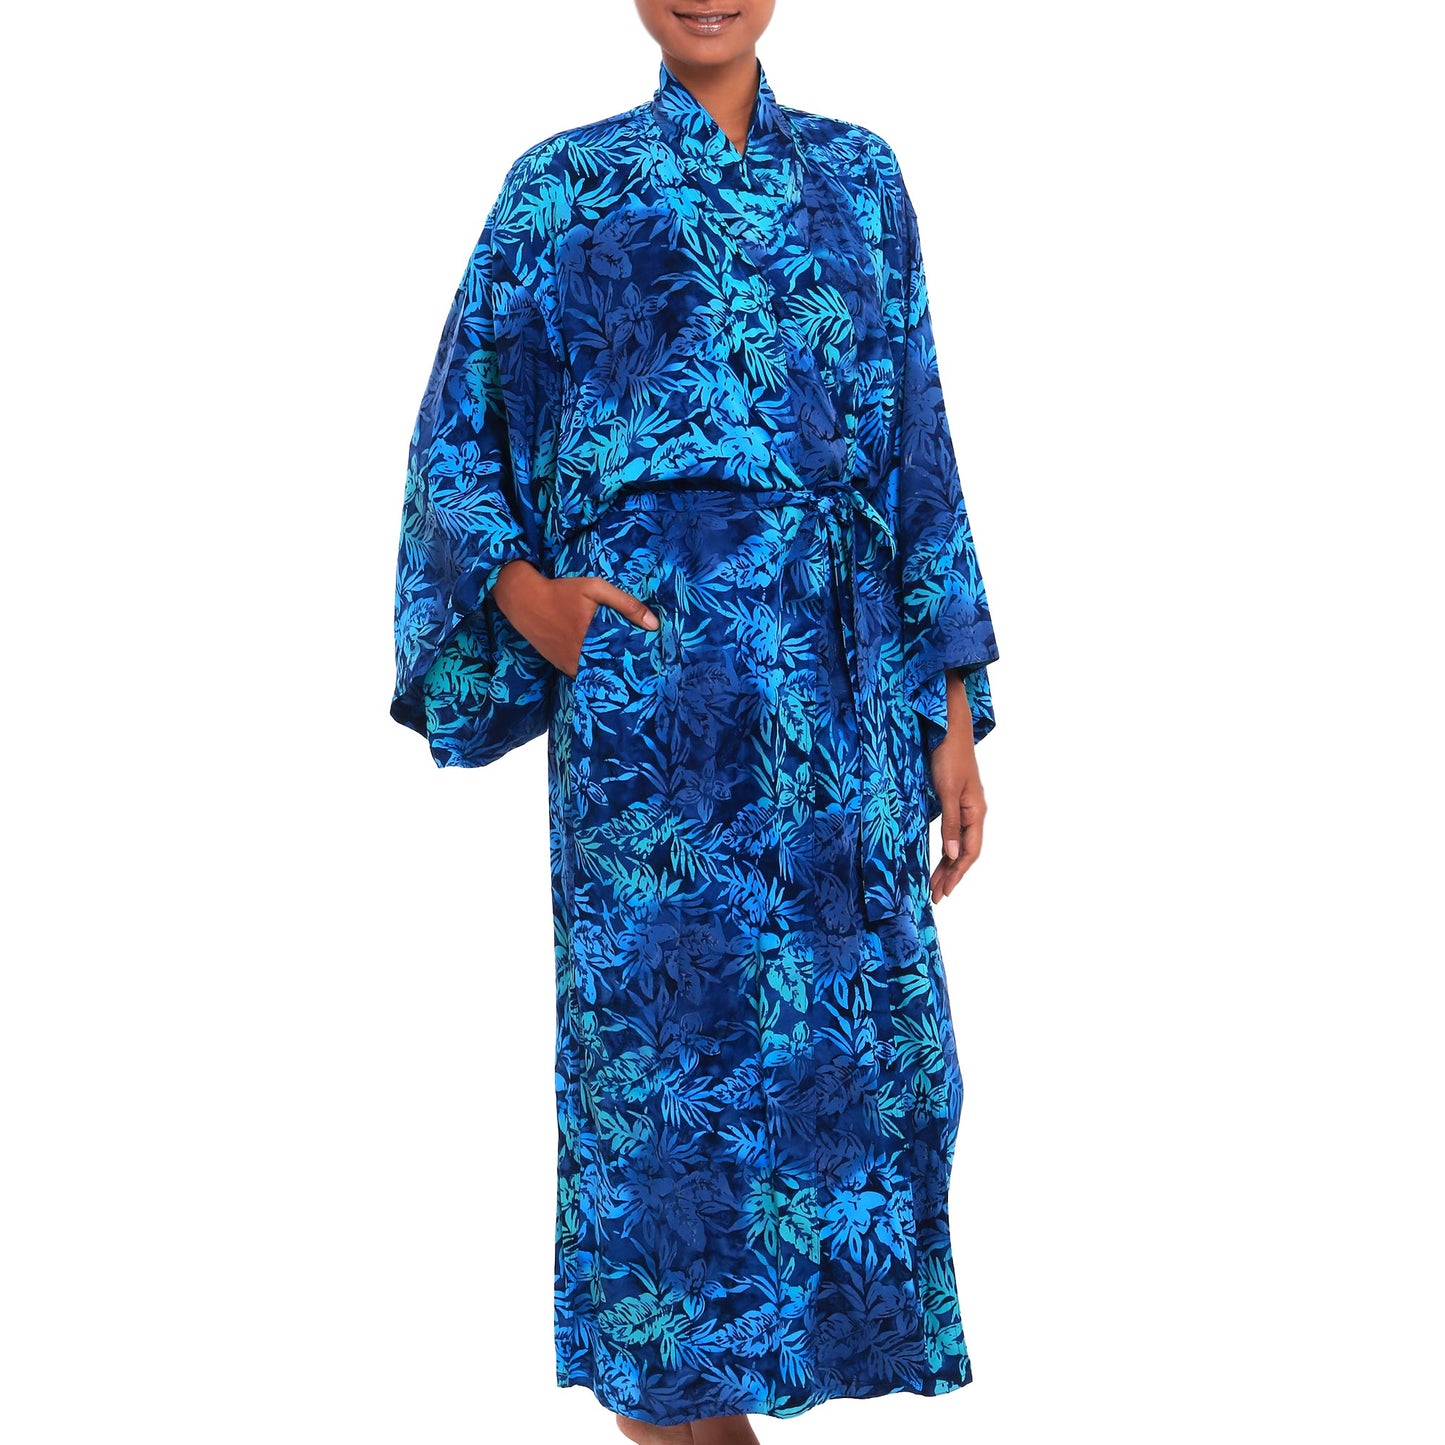 Bedugul Dusk Navy and Green Batik Print Long Sleeved Rayon Robe with Belt